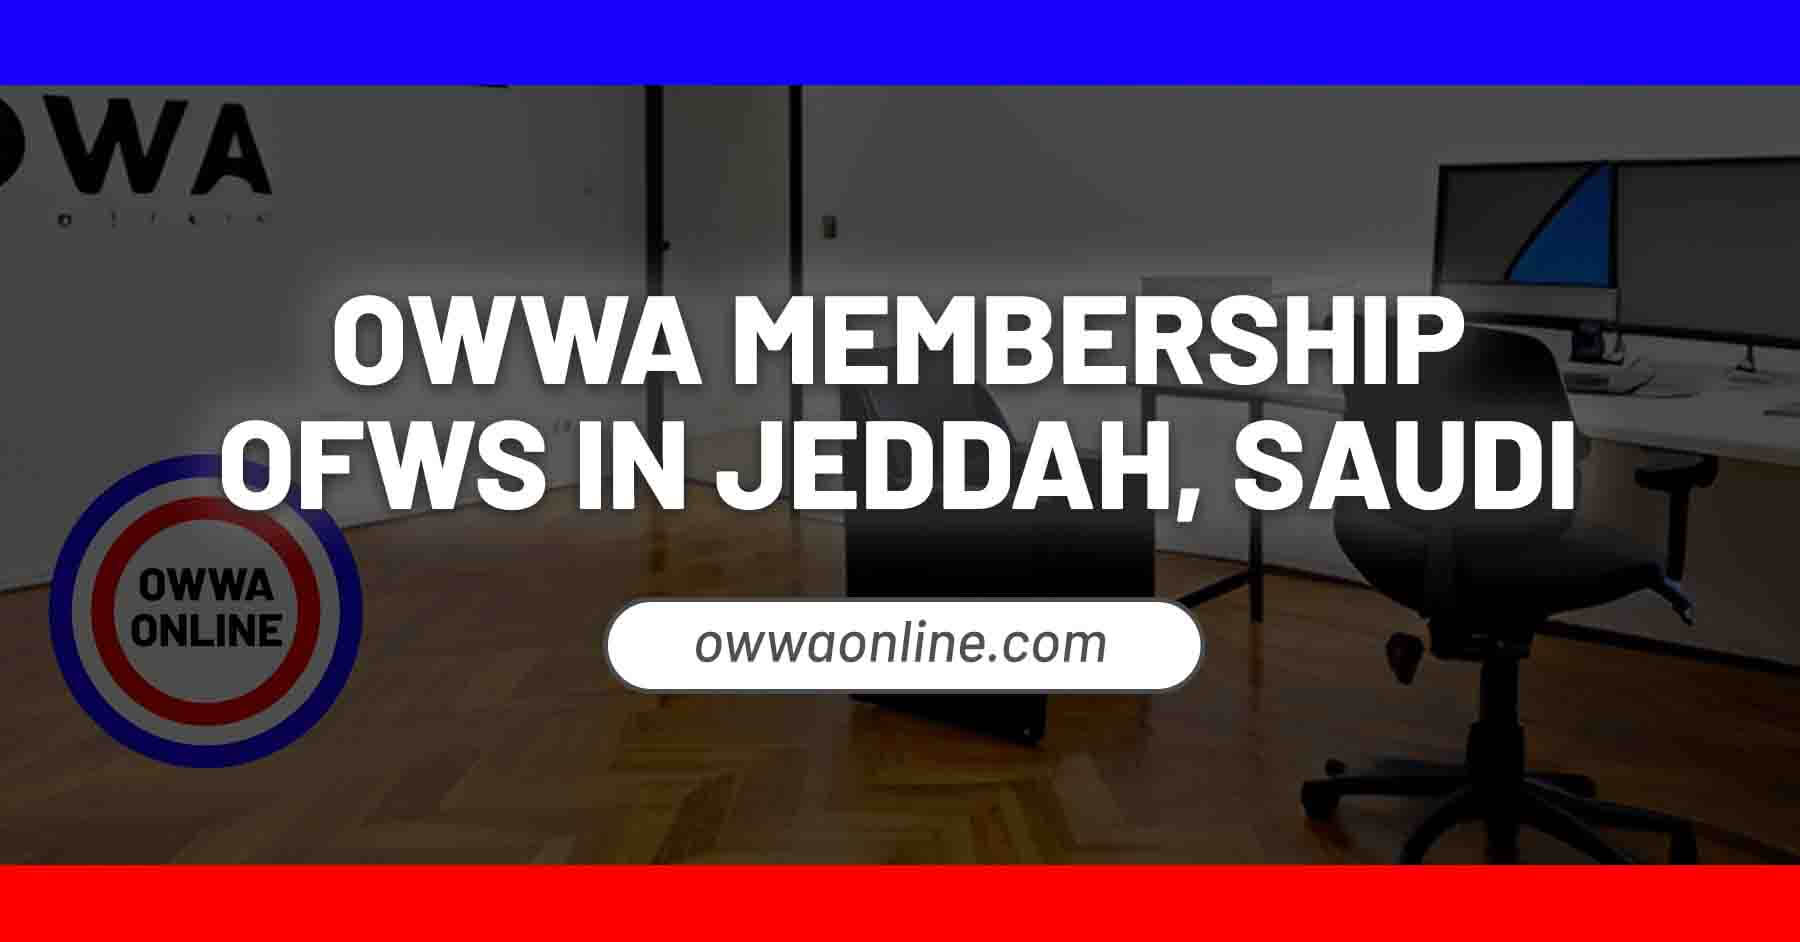 owwa membership application appointment in jeddah saudi arabia